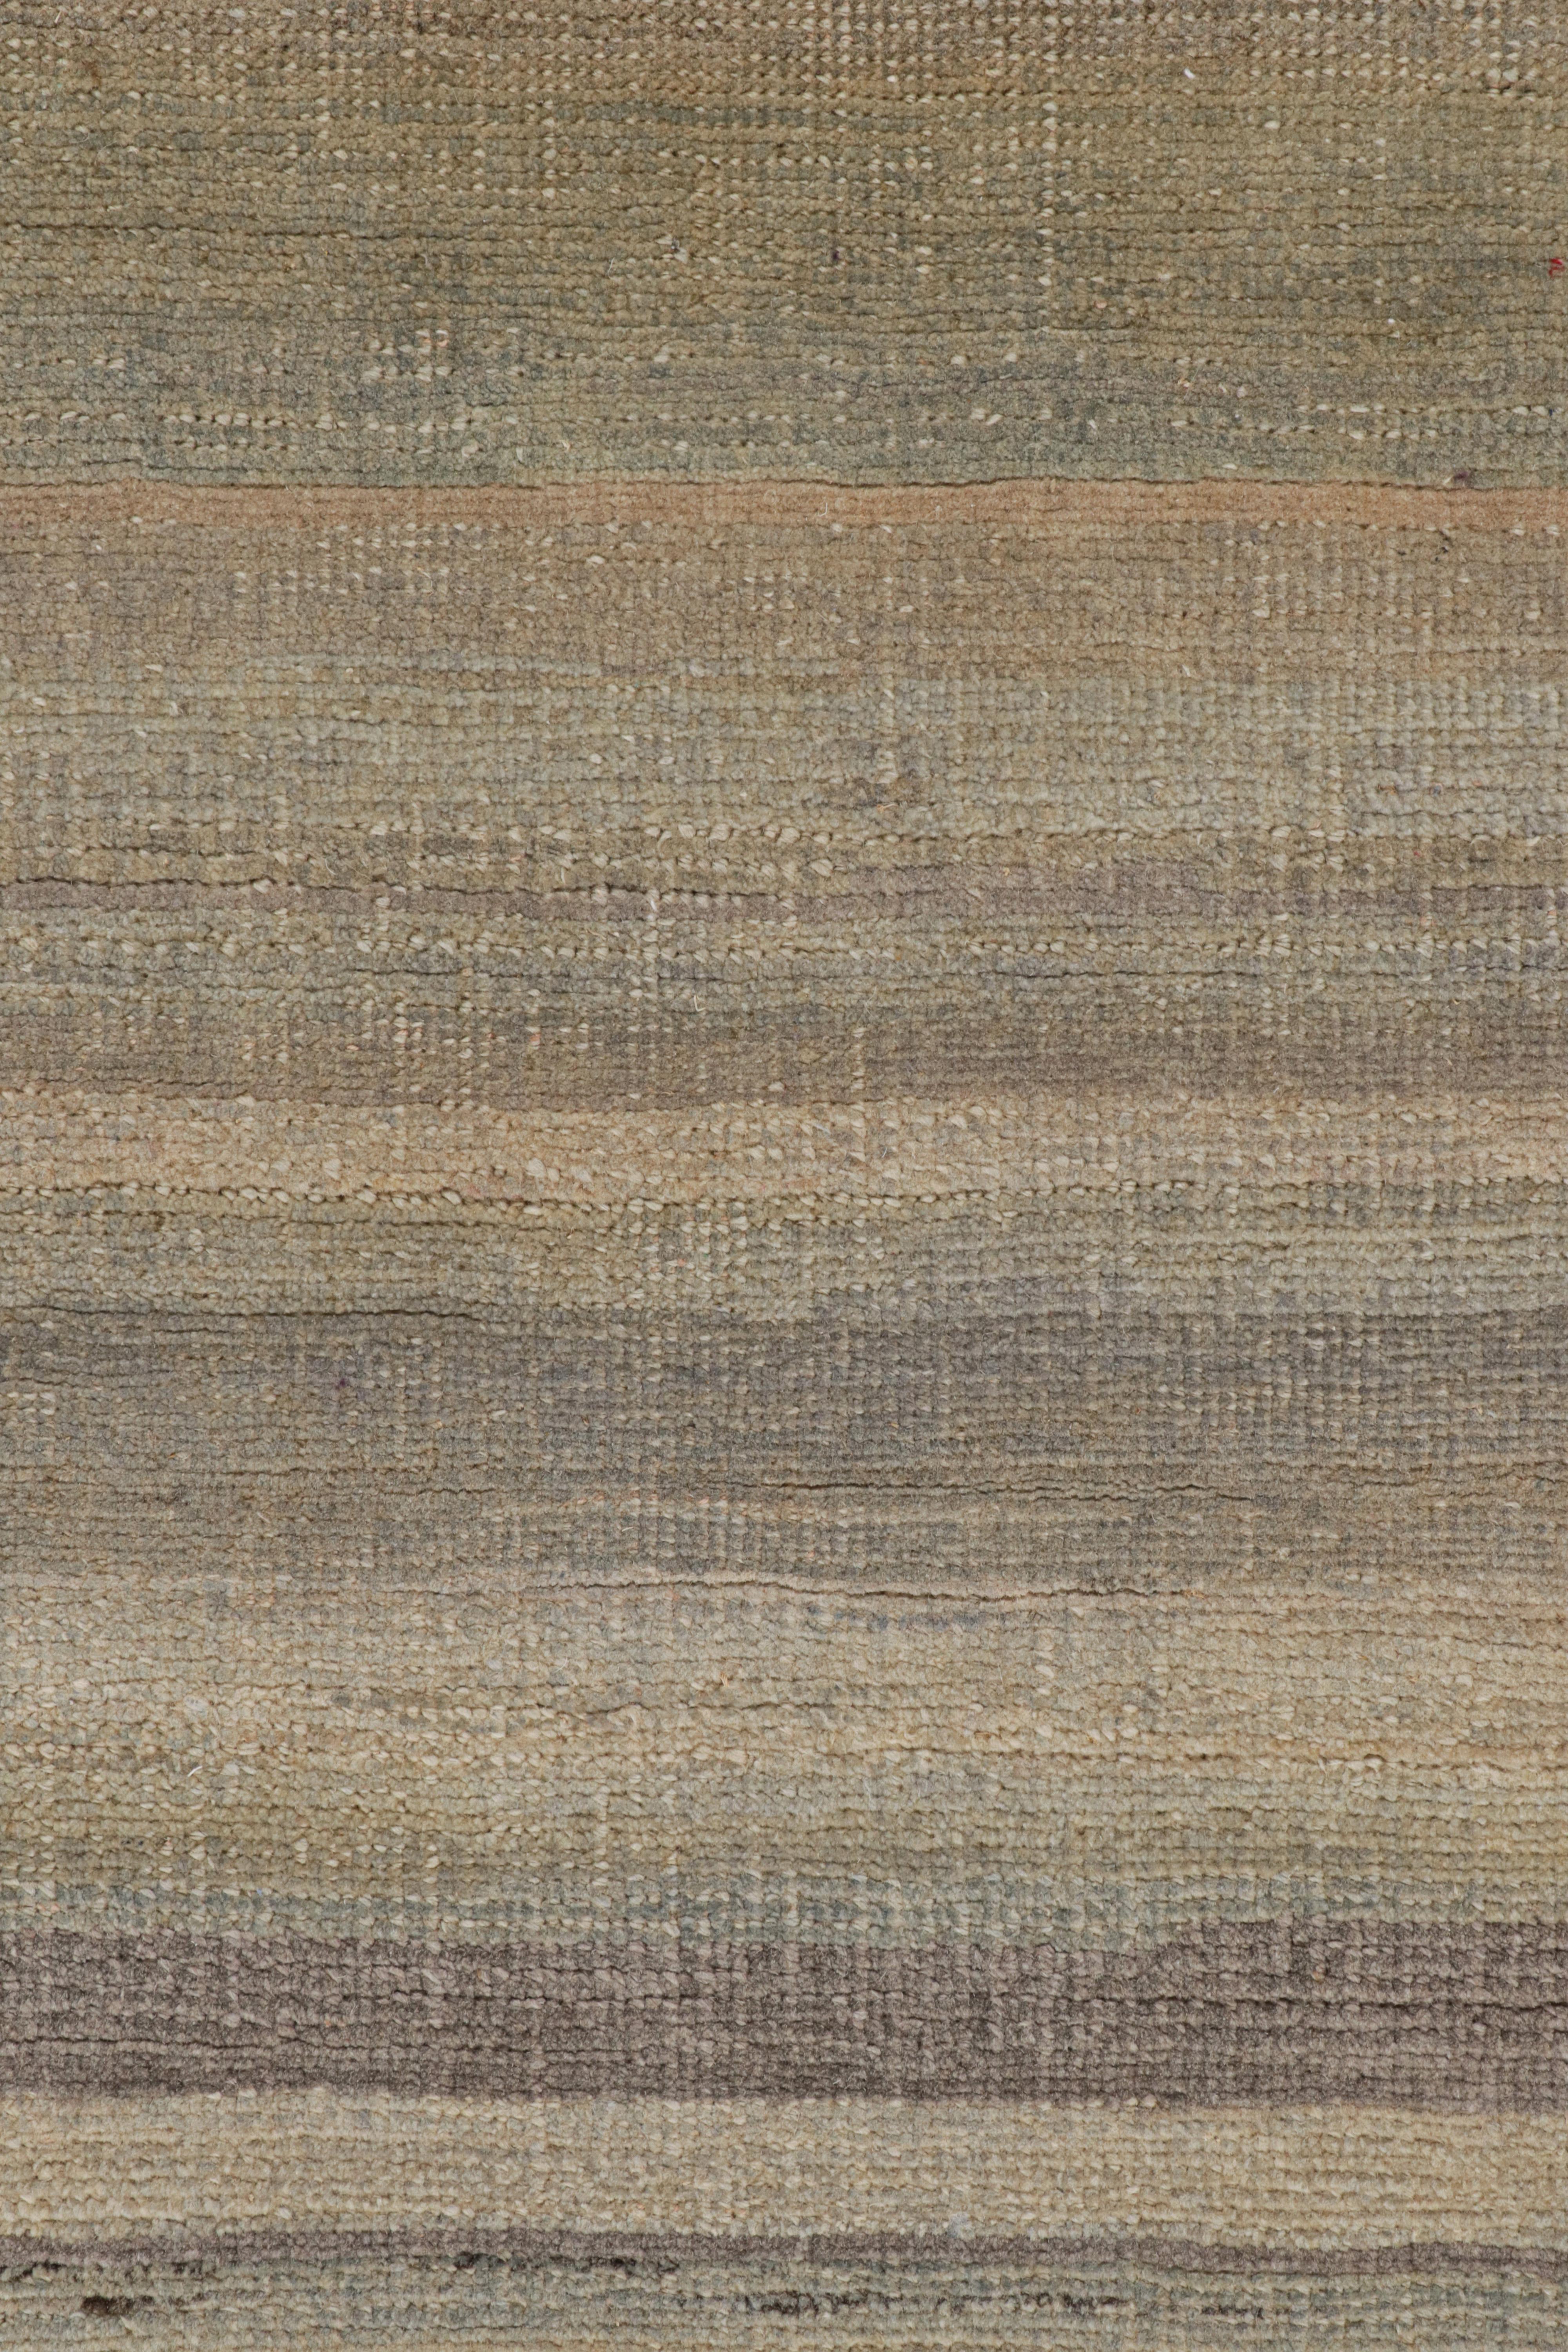 Moderne Rug & Kilim's Modern Textural Rug in Beige, Gray and Blue Stripes and Striae (Tapis à rayures beige, gris et bleu) en vente